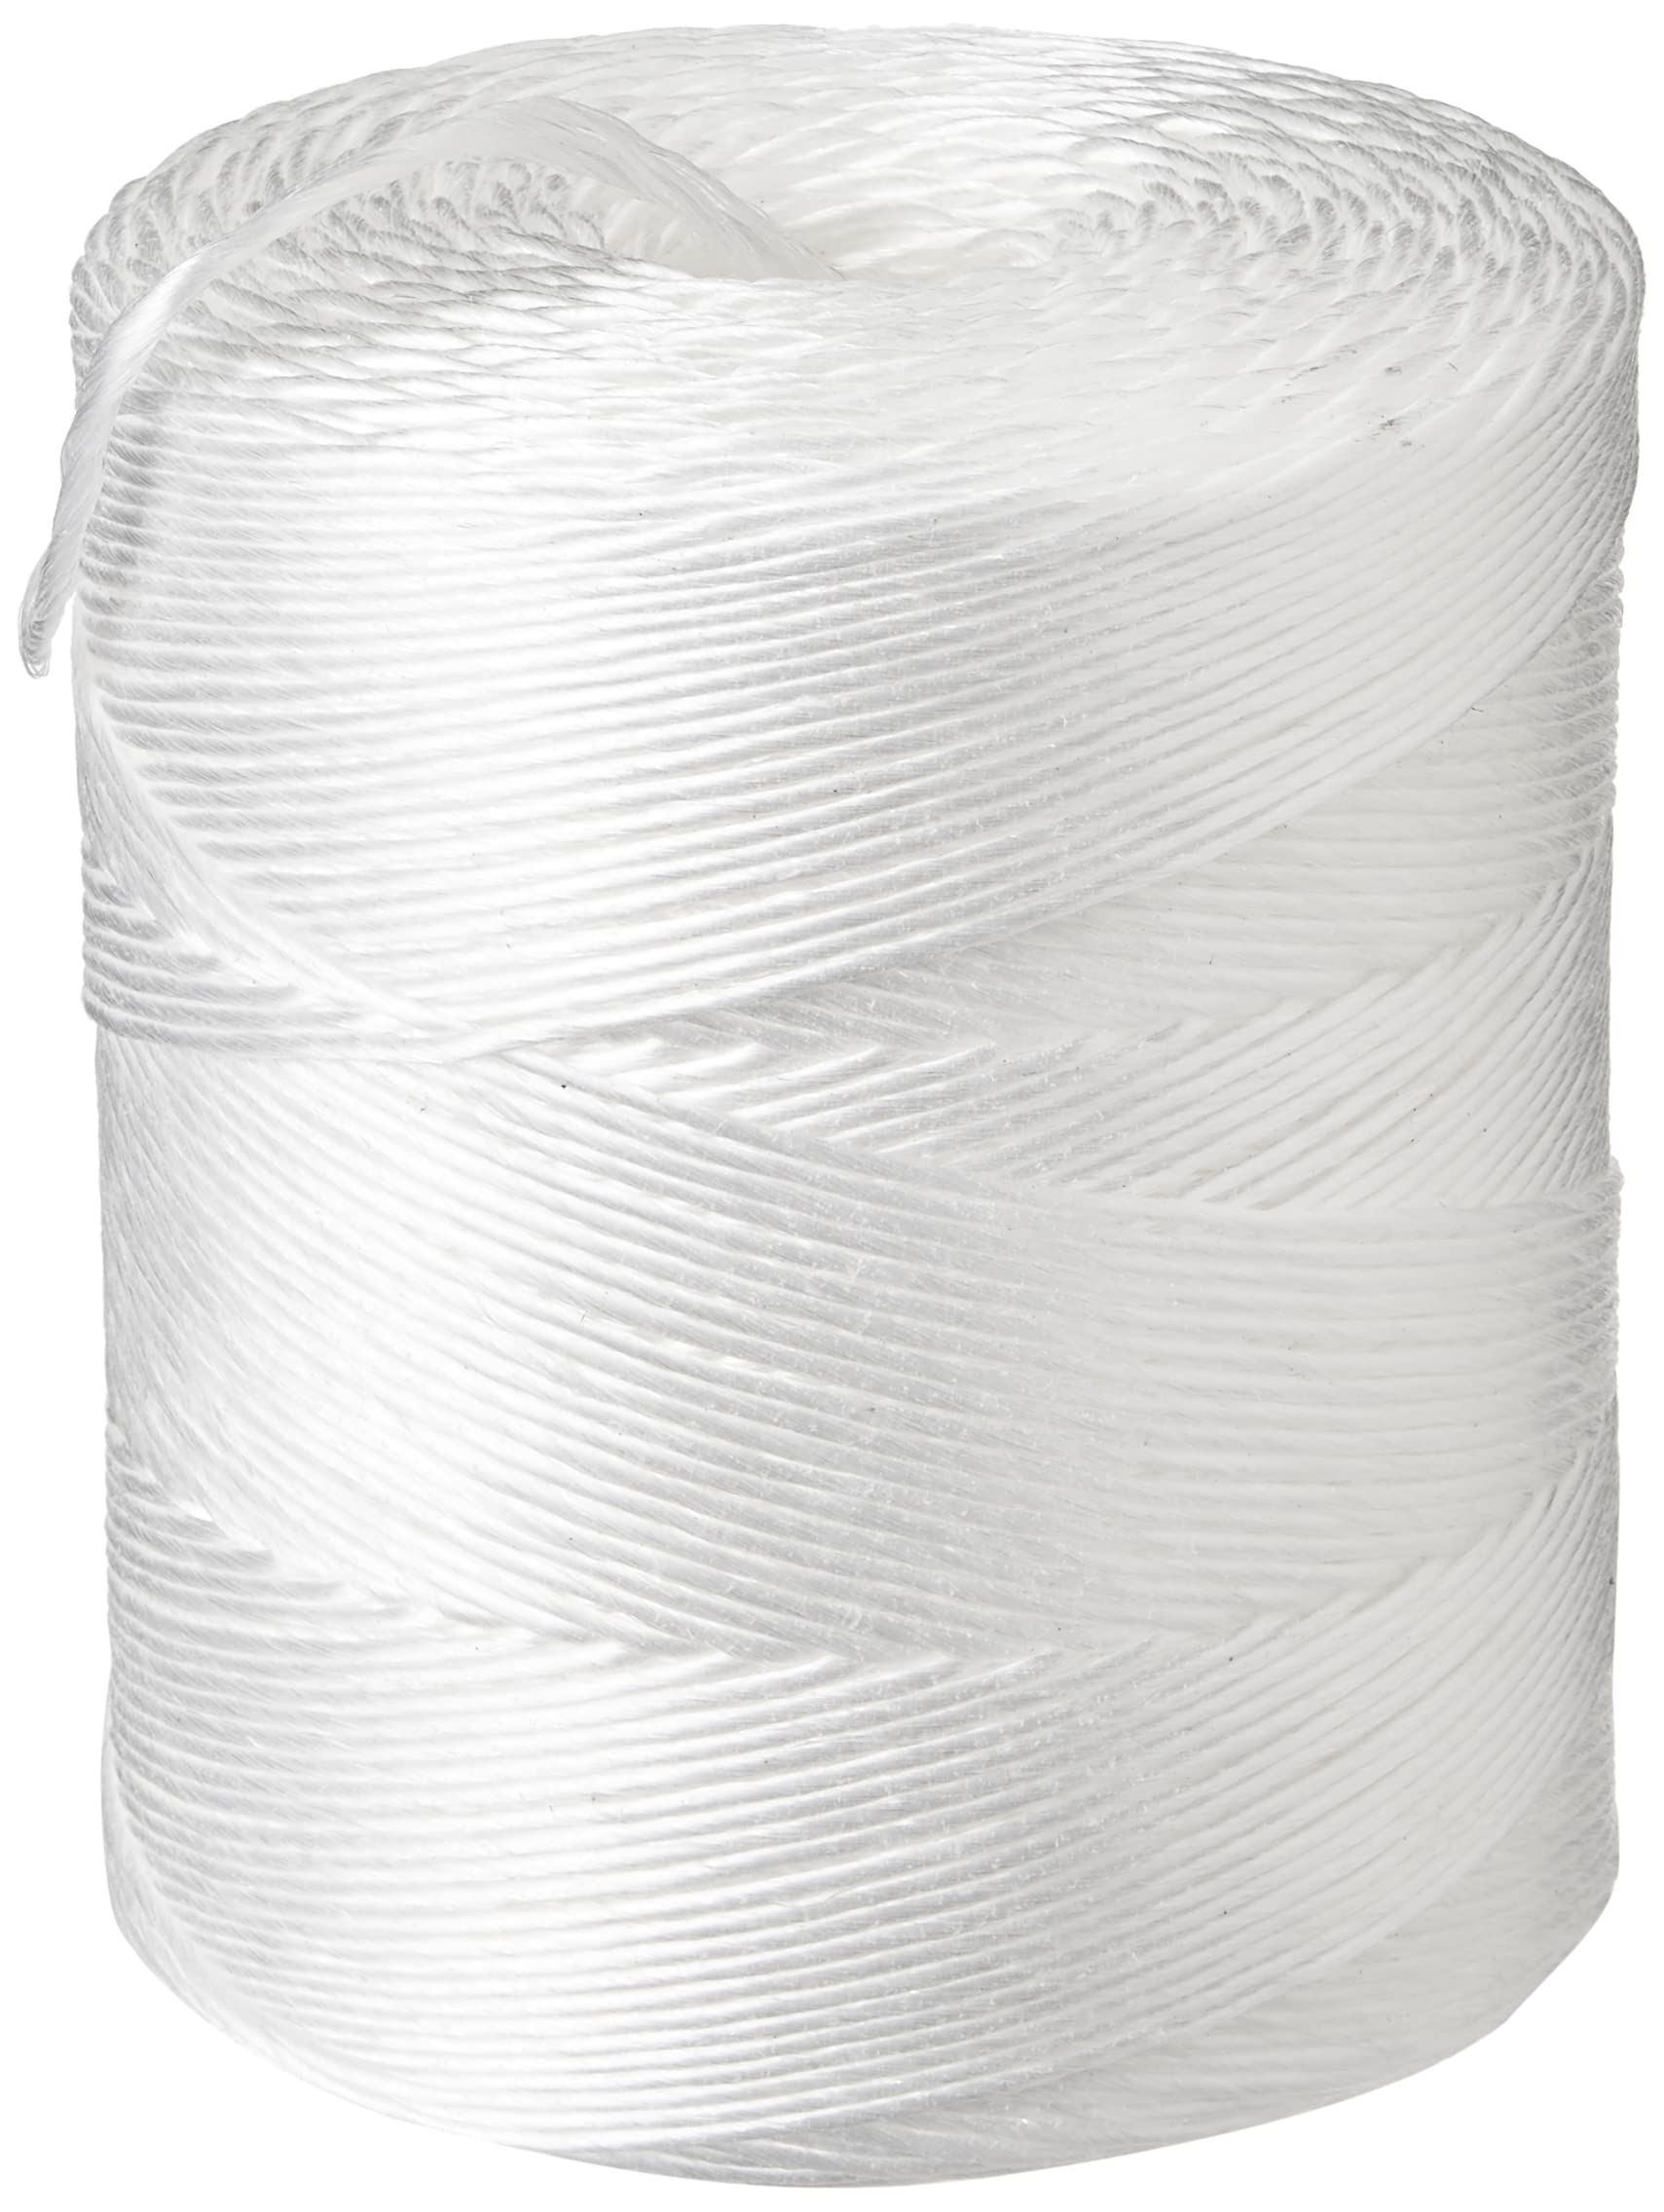 Шпагат из полипропилена Kraftcom, 3мм х 100м (4шт), цвет - белый шнур для вязания без сердечника 70% хлопок 30% полиэстер ширина 3мм 100м 160±10гр 128